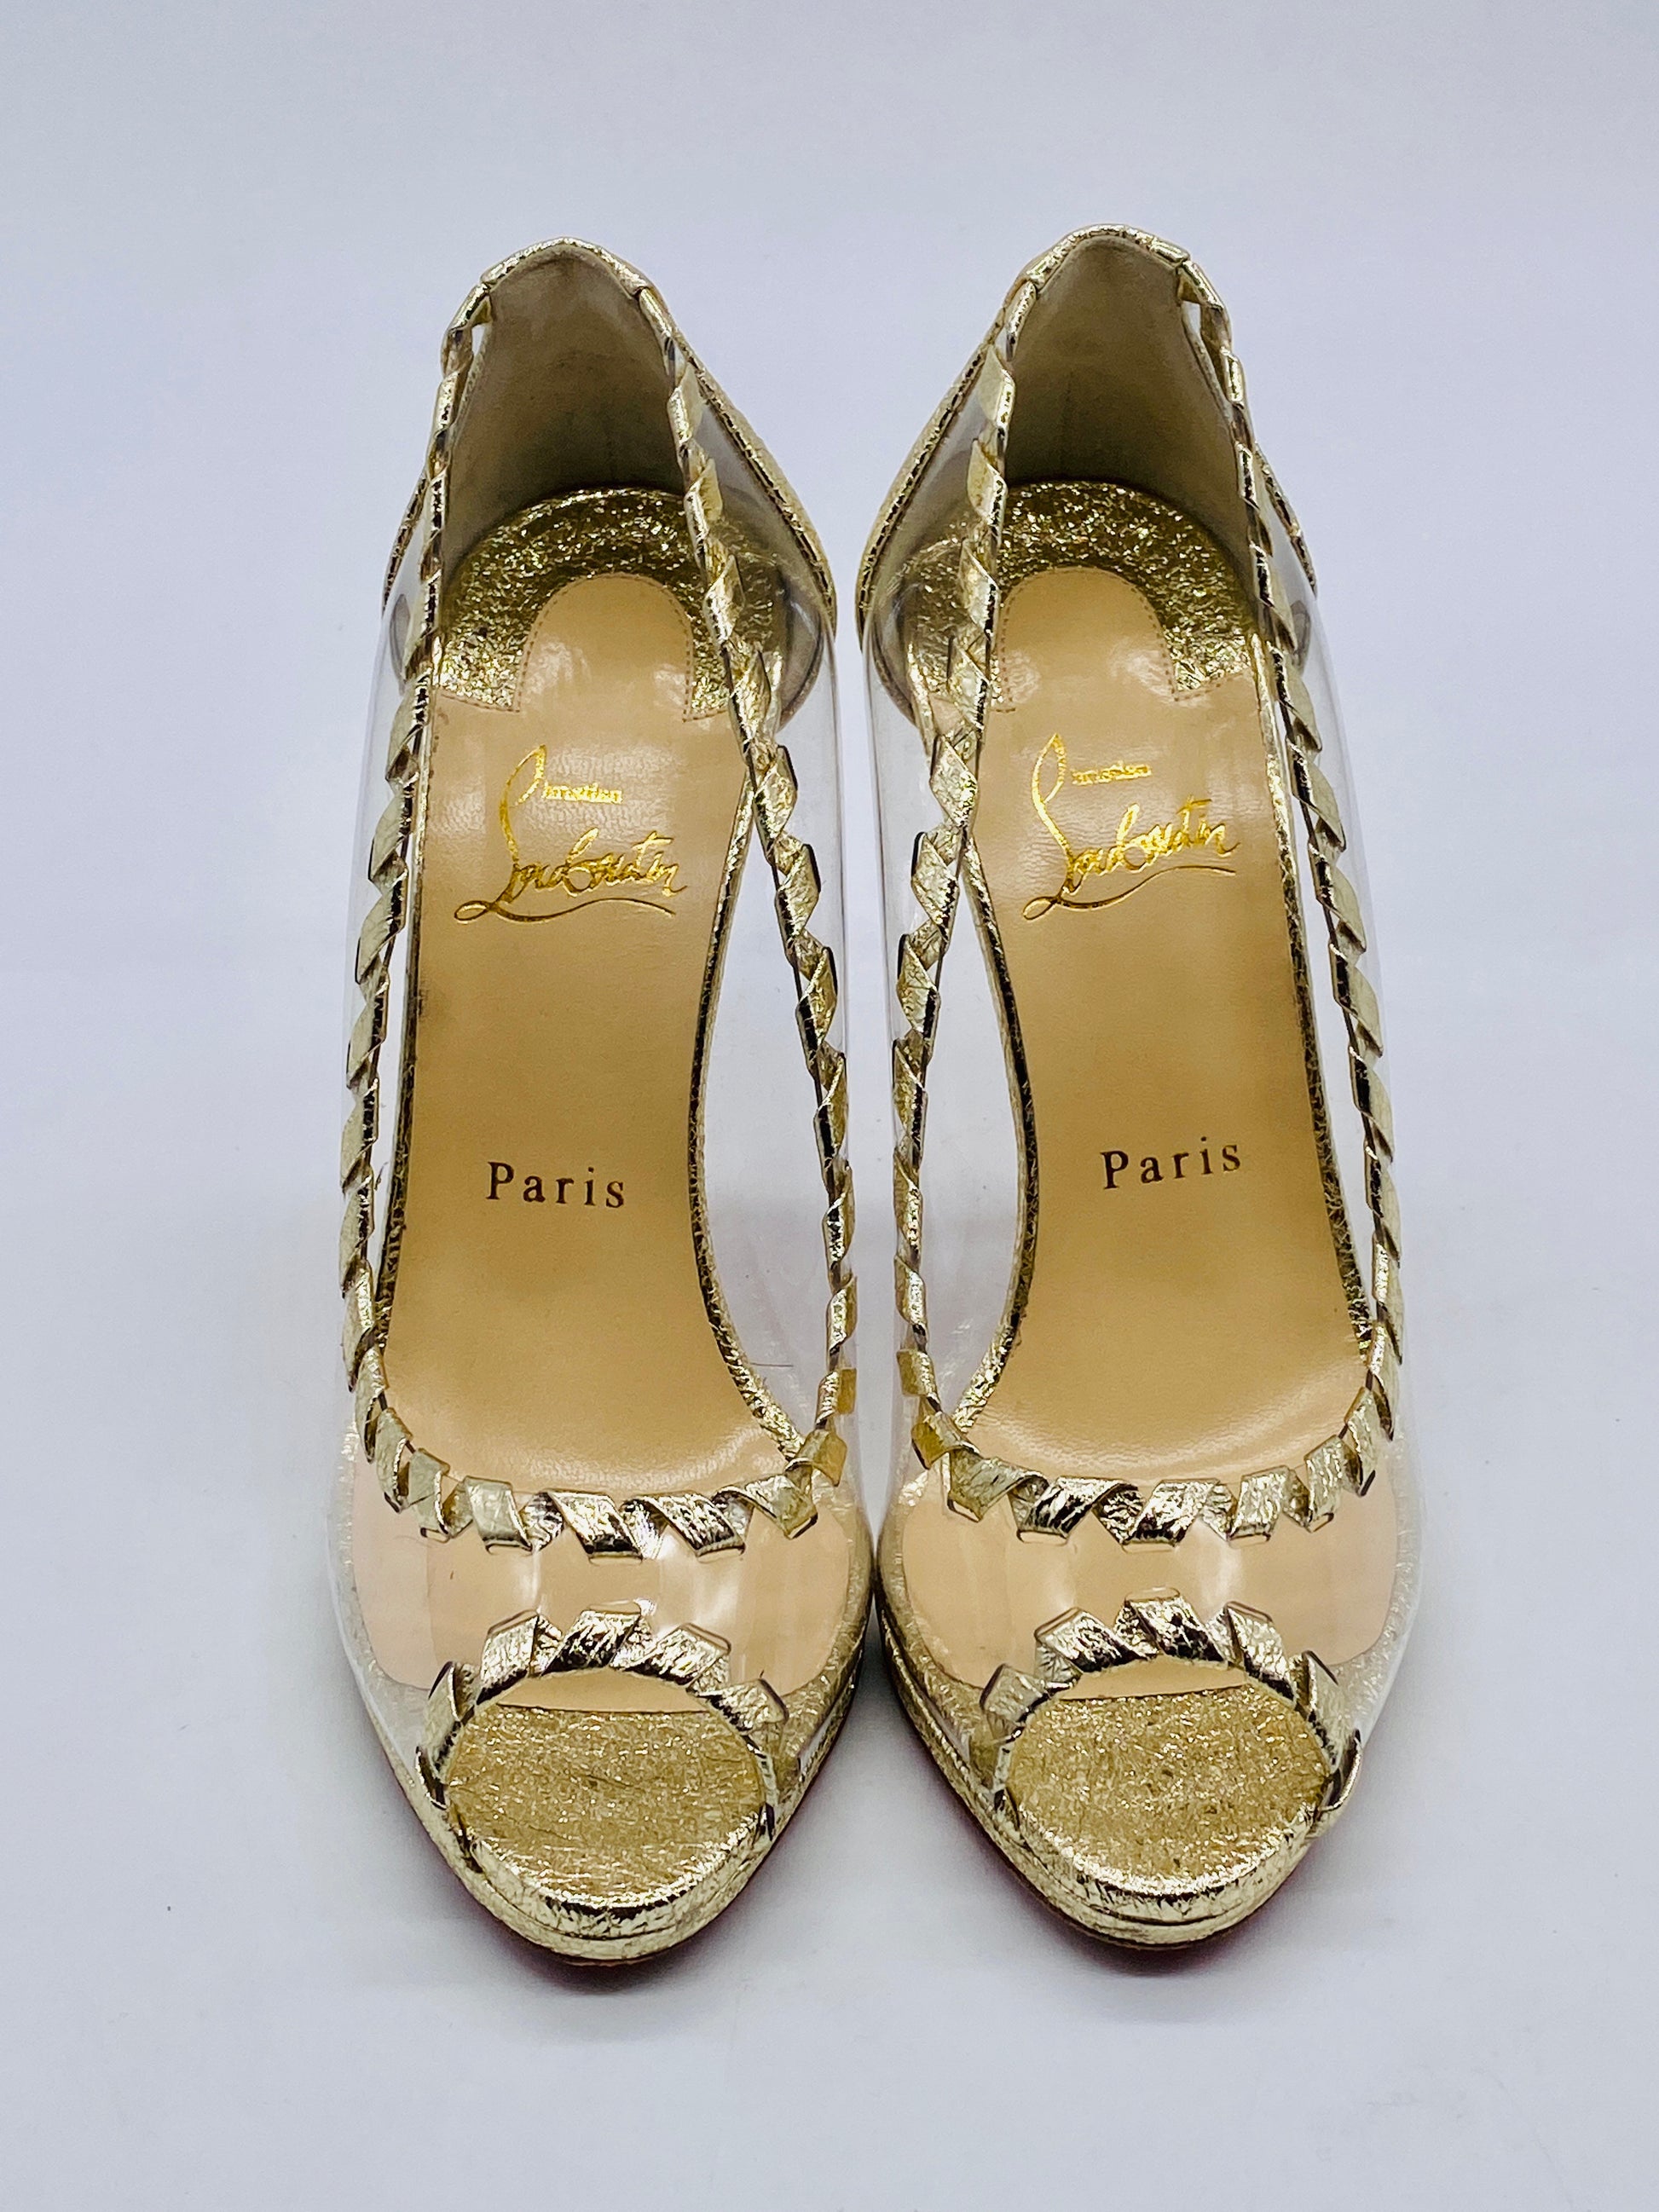 Christian Louboutin Paris Flats Slippers Gold Ballet Shoes EU 38